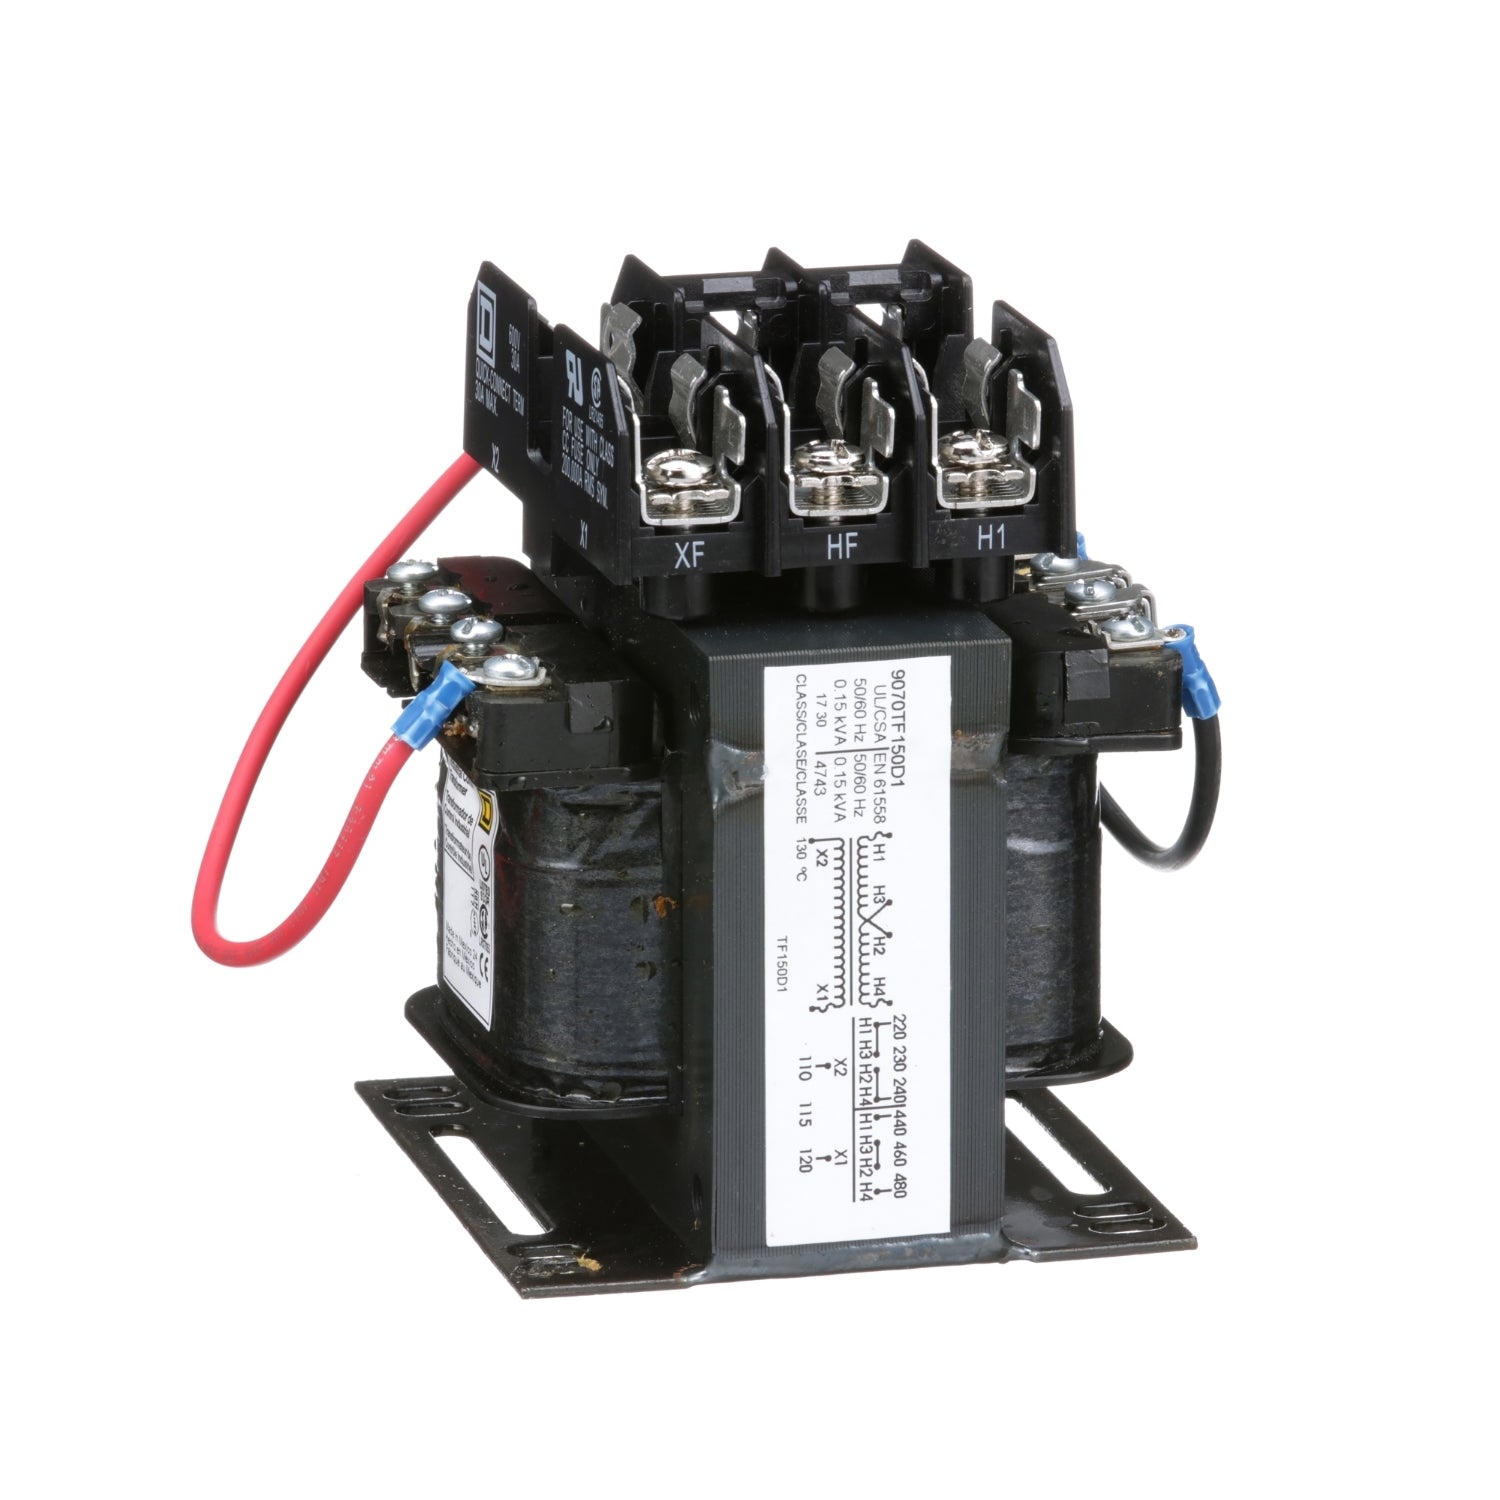 9070TF150D1 | Schneider Electric Industrial control transformer, Type TF, 1 phase, 150VA, 240x480V primary, 120V secondary, 50/60Hz